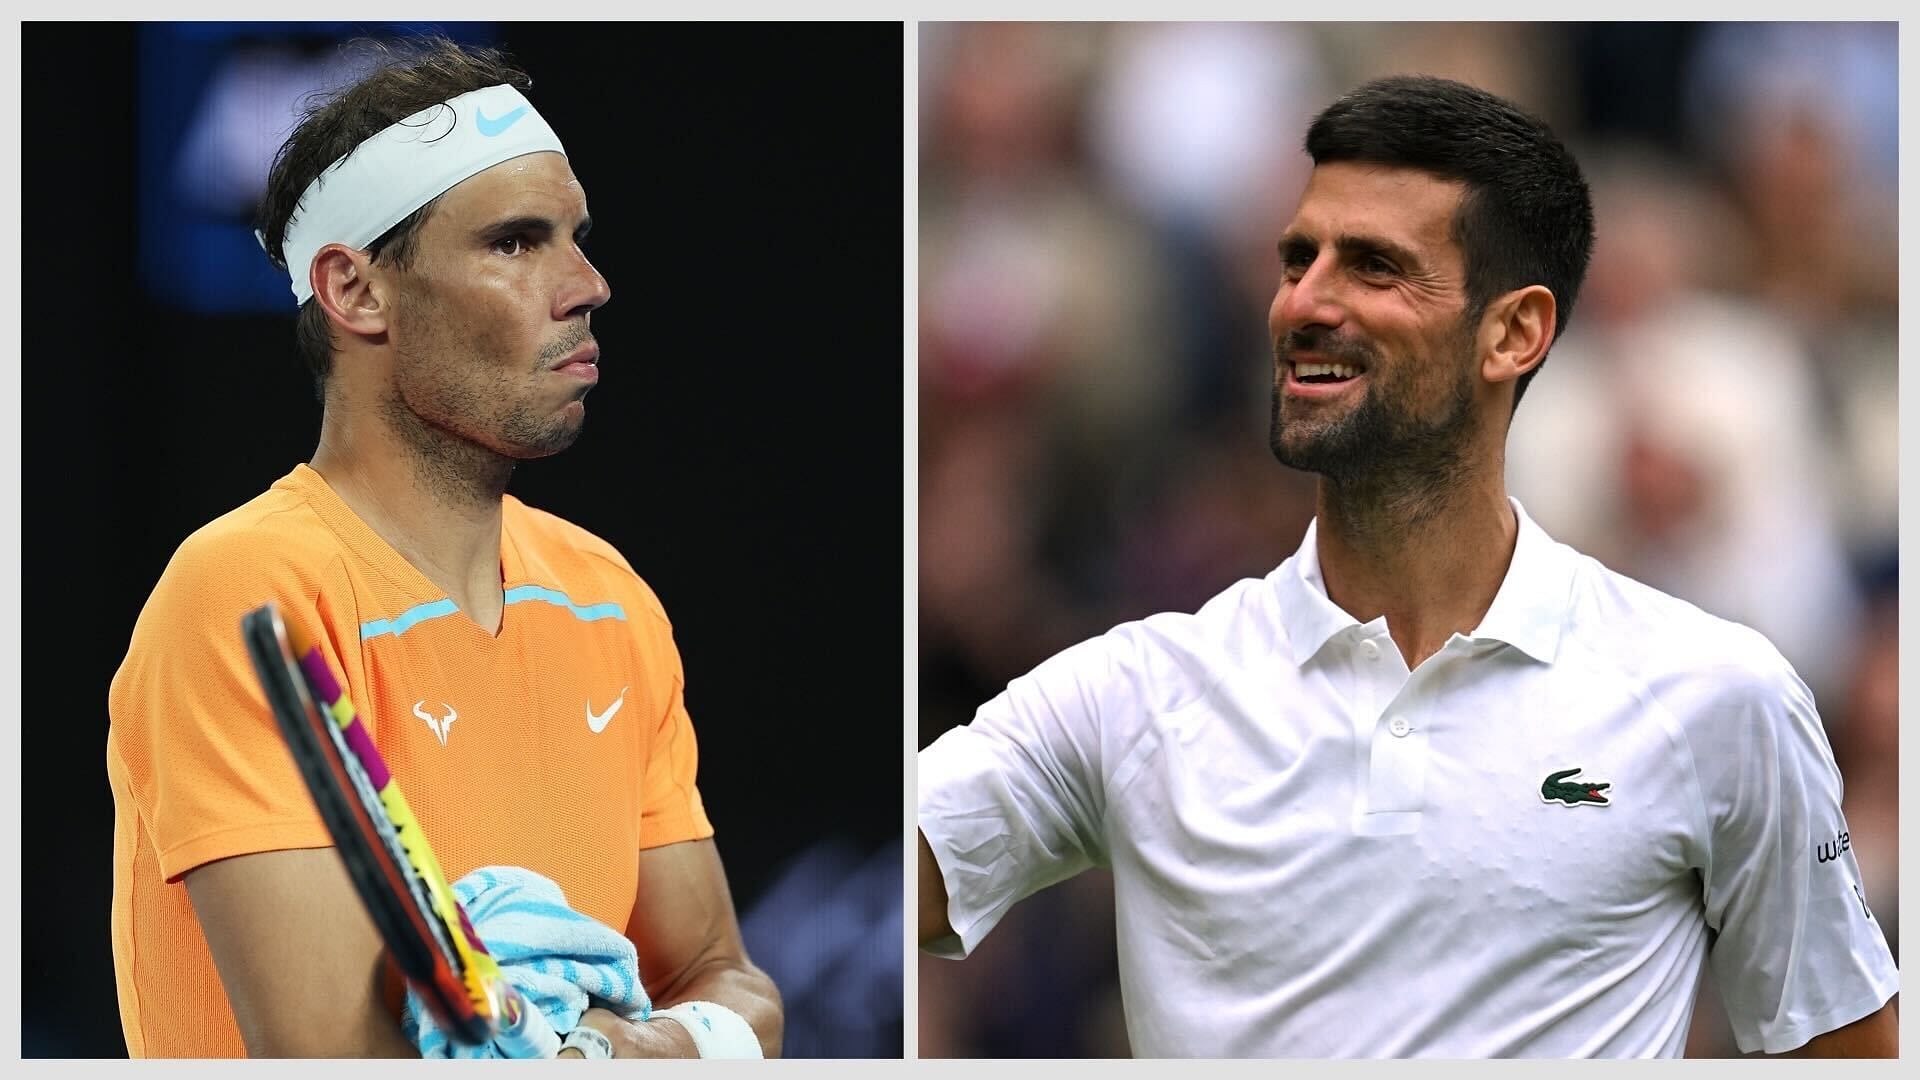 Rafael Nadal and Novak Djokovic have won a combined 46 Grand Slam titles.